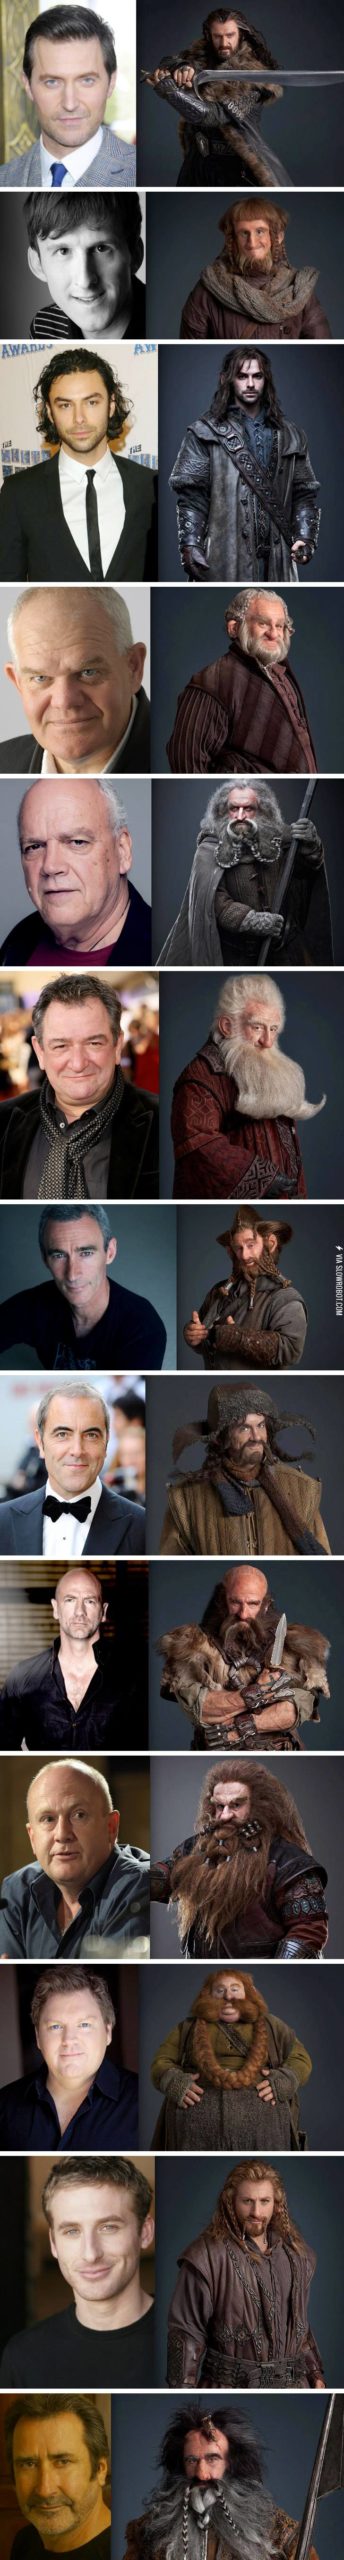 The+Hobbit+dwarves%2C+pre+and+post+make-up.